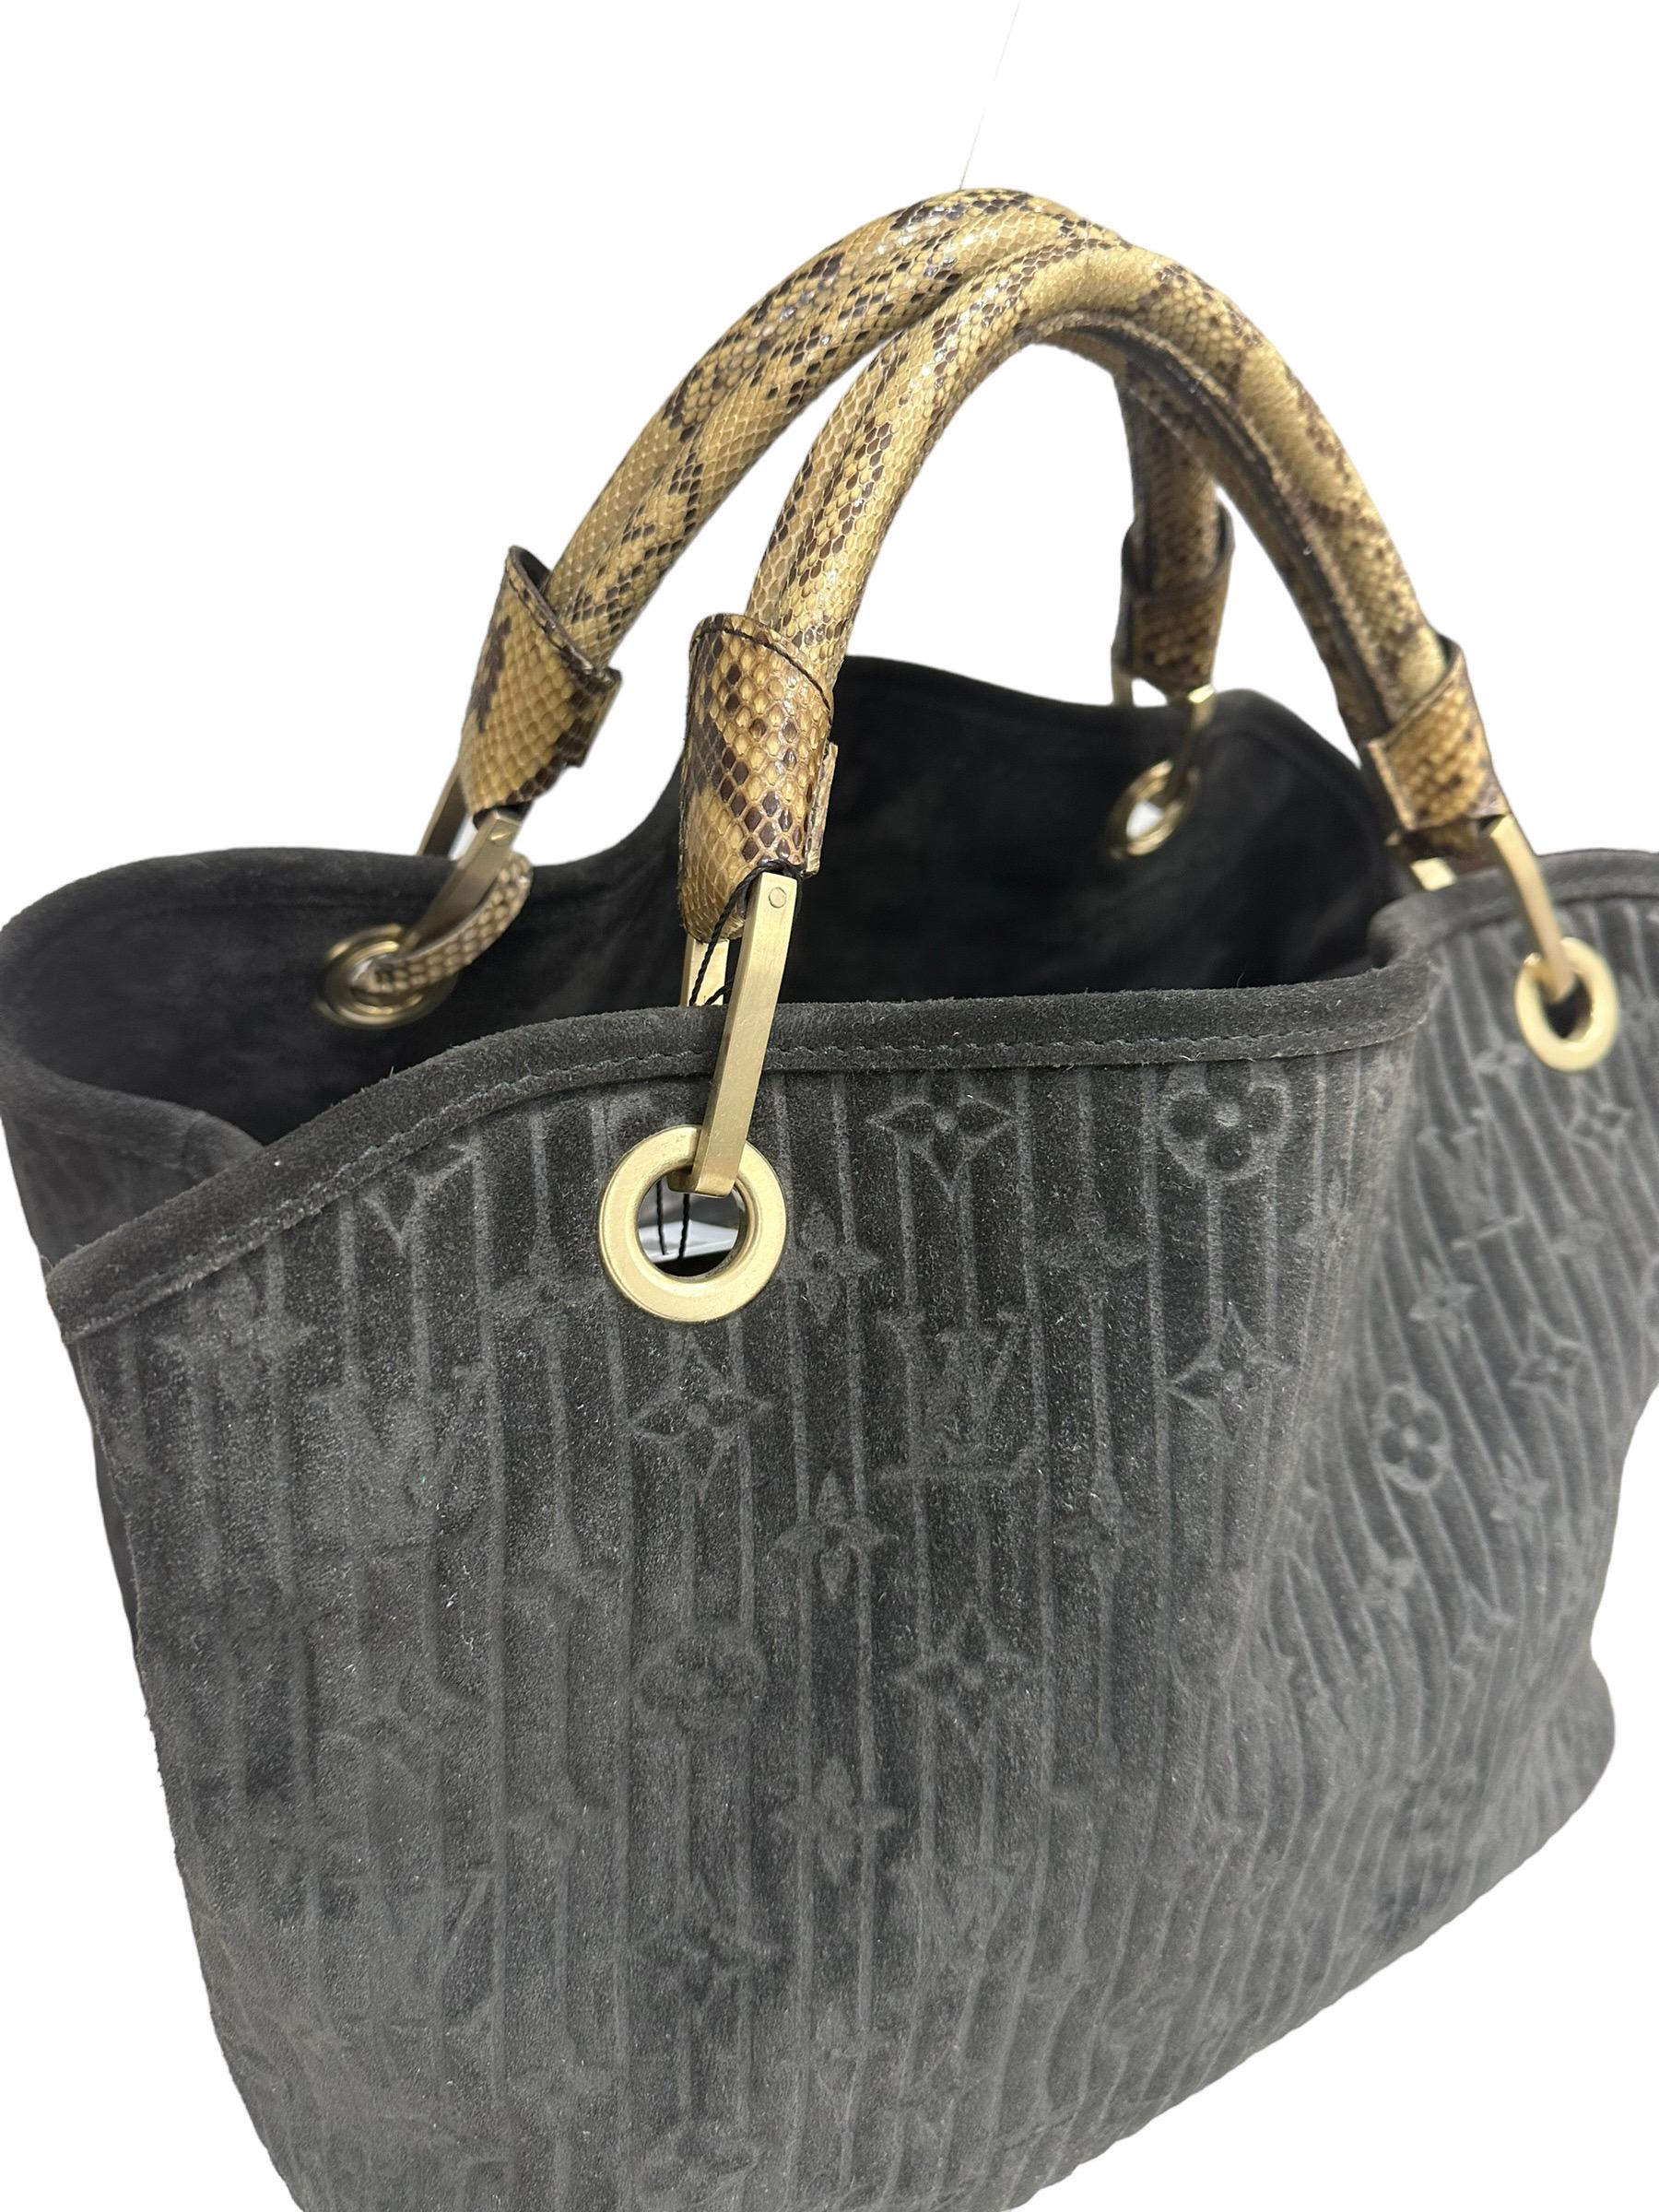 2008 Lousi Vuitton Whisper Black Suede Top Handle Bag Limited Edition For Sale 7